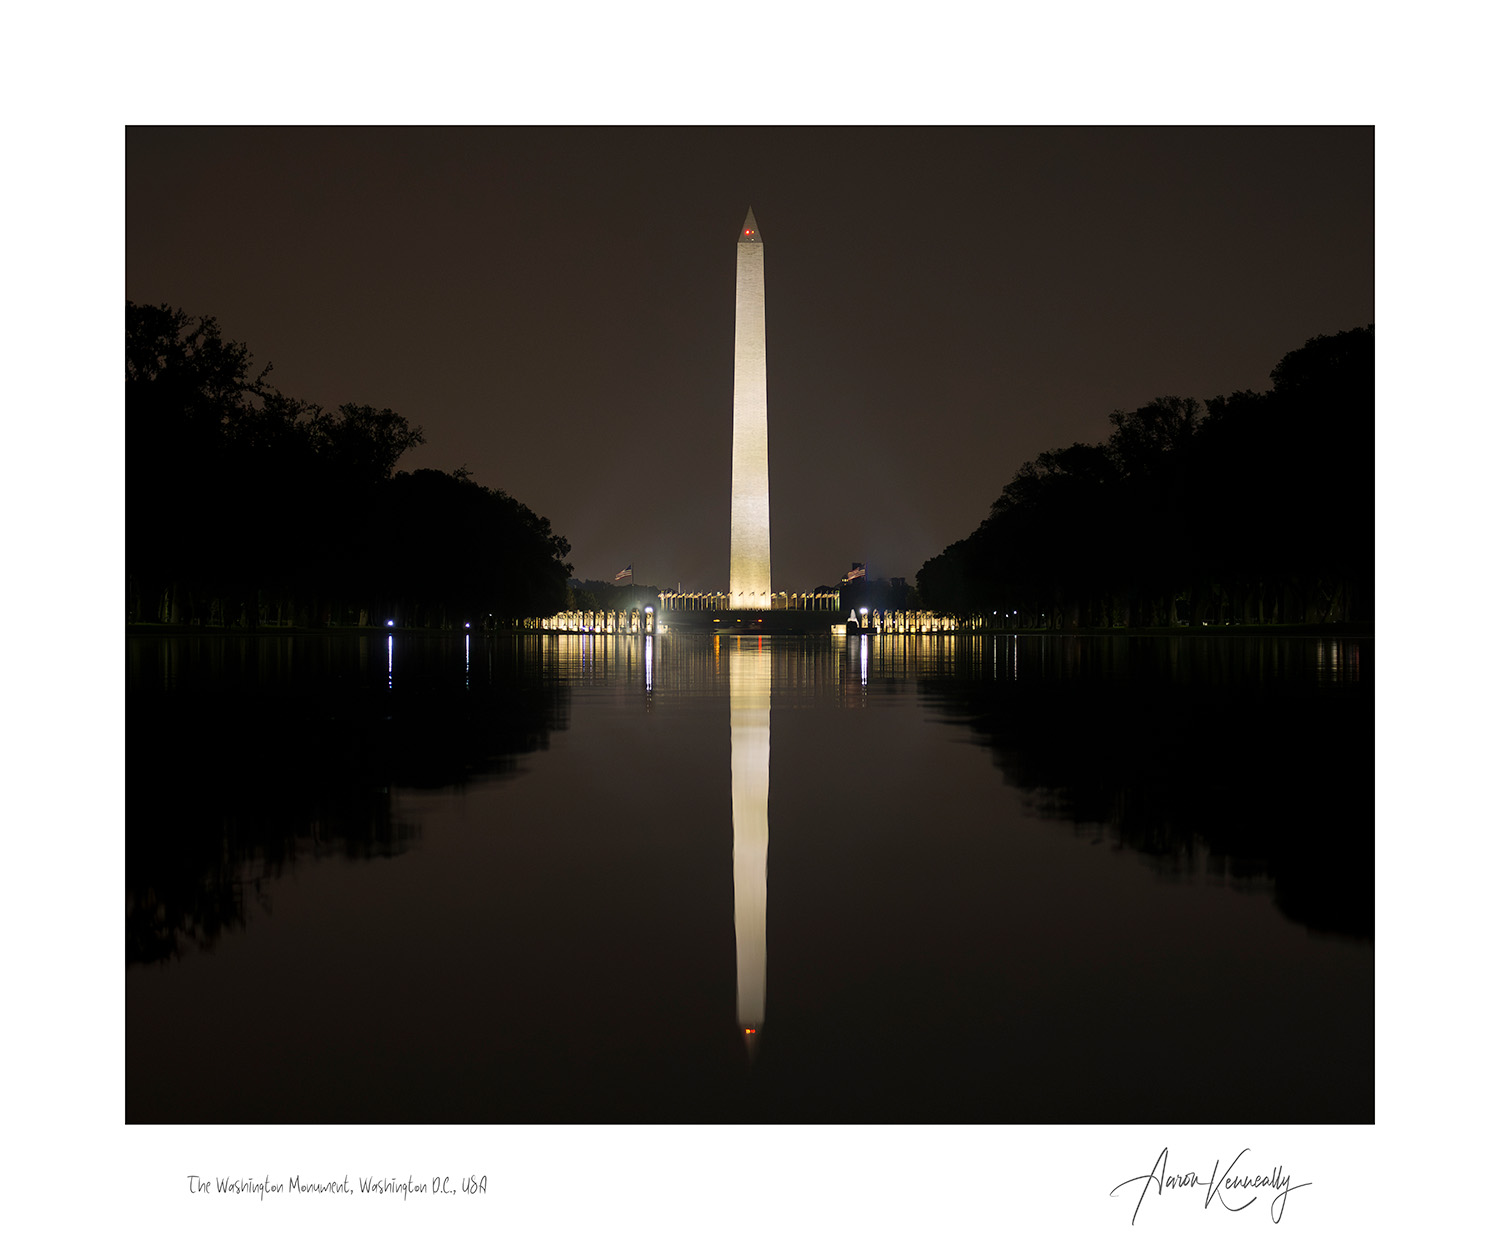 The Washington Monument, Washington D.C., USA